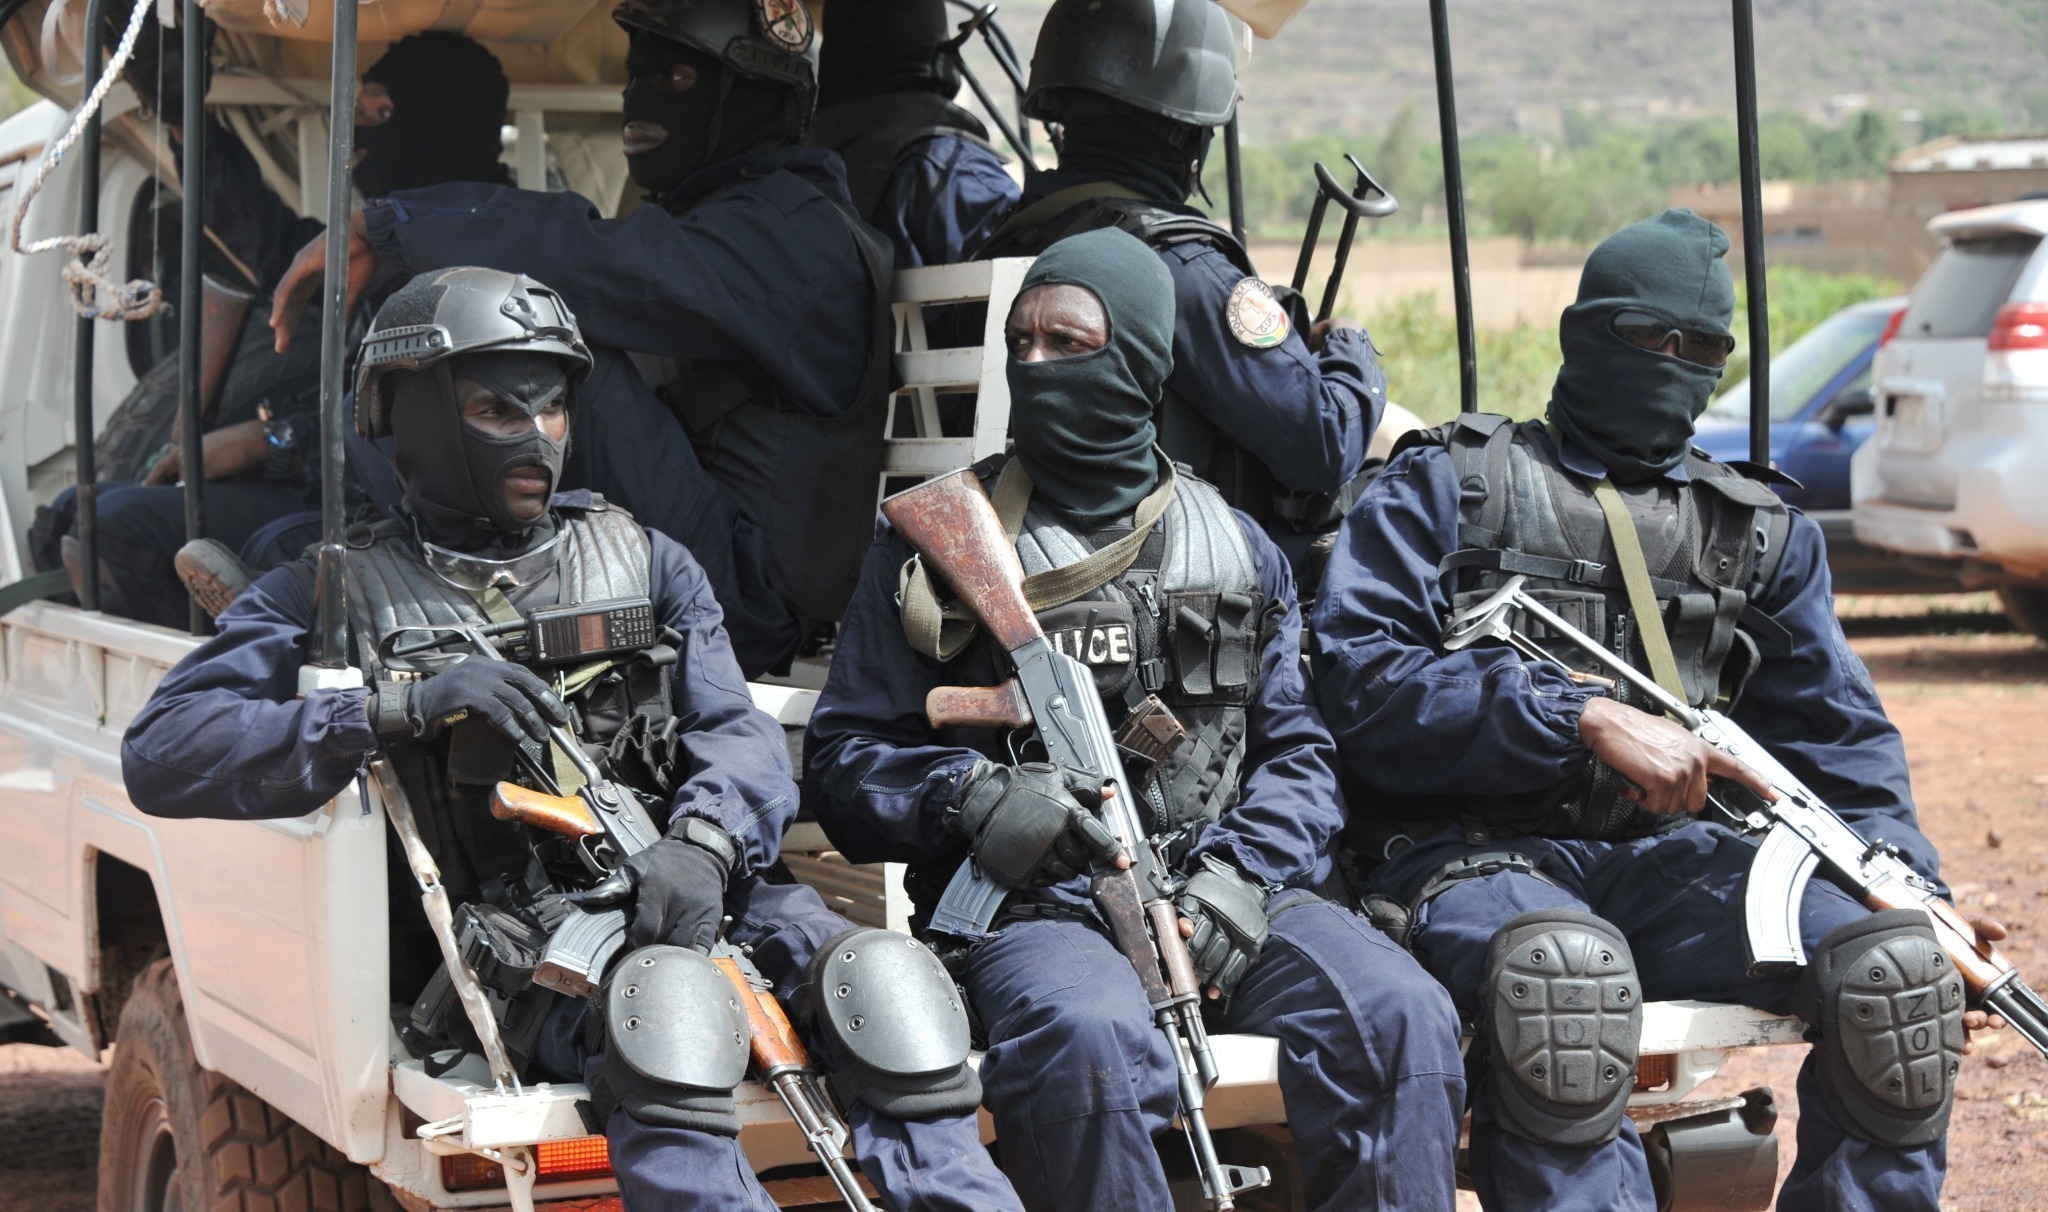 Mali’s anti-terrorist "Forsat" unit received UK-funded training (Photo: Habibou Kouyate / AFP via Getty)